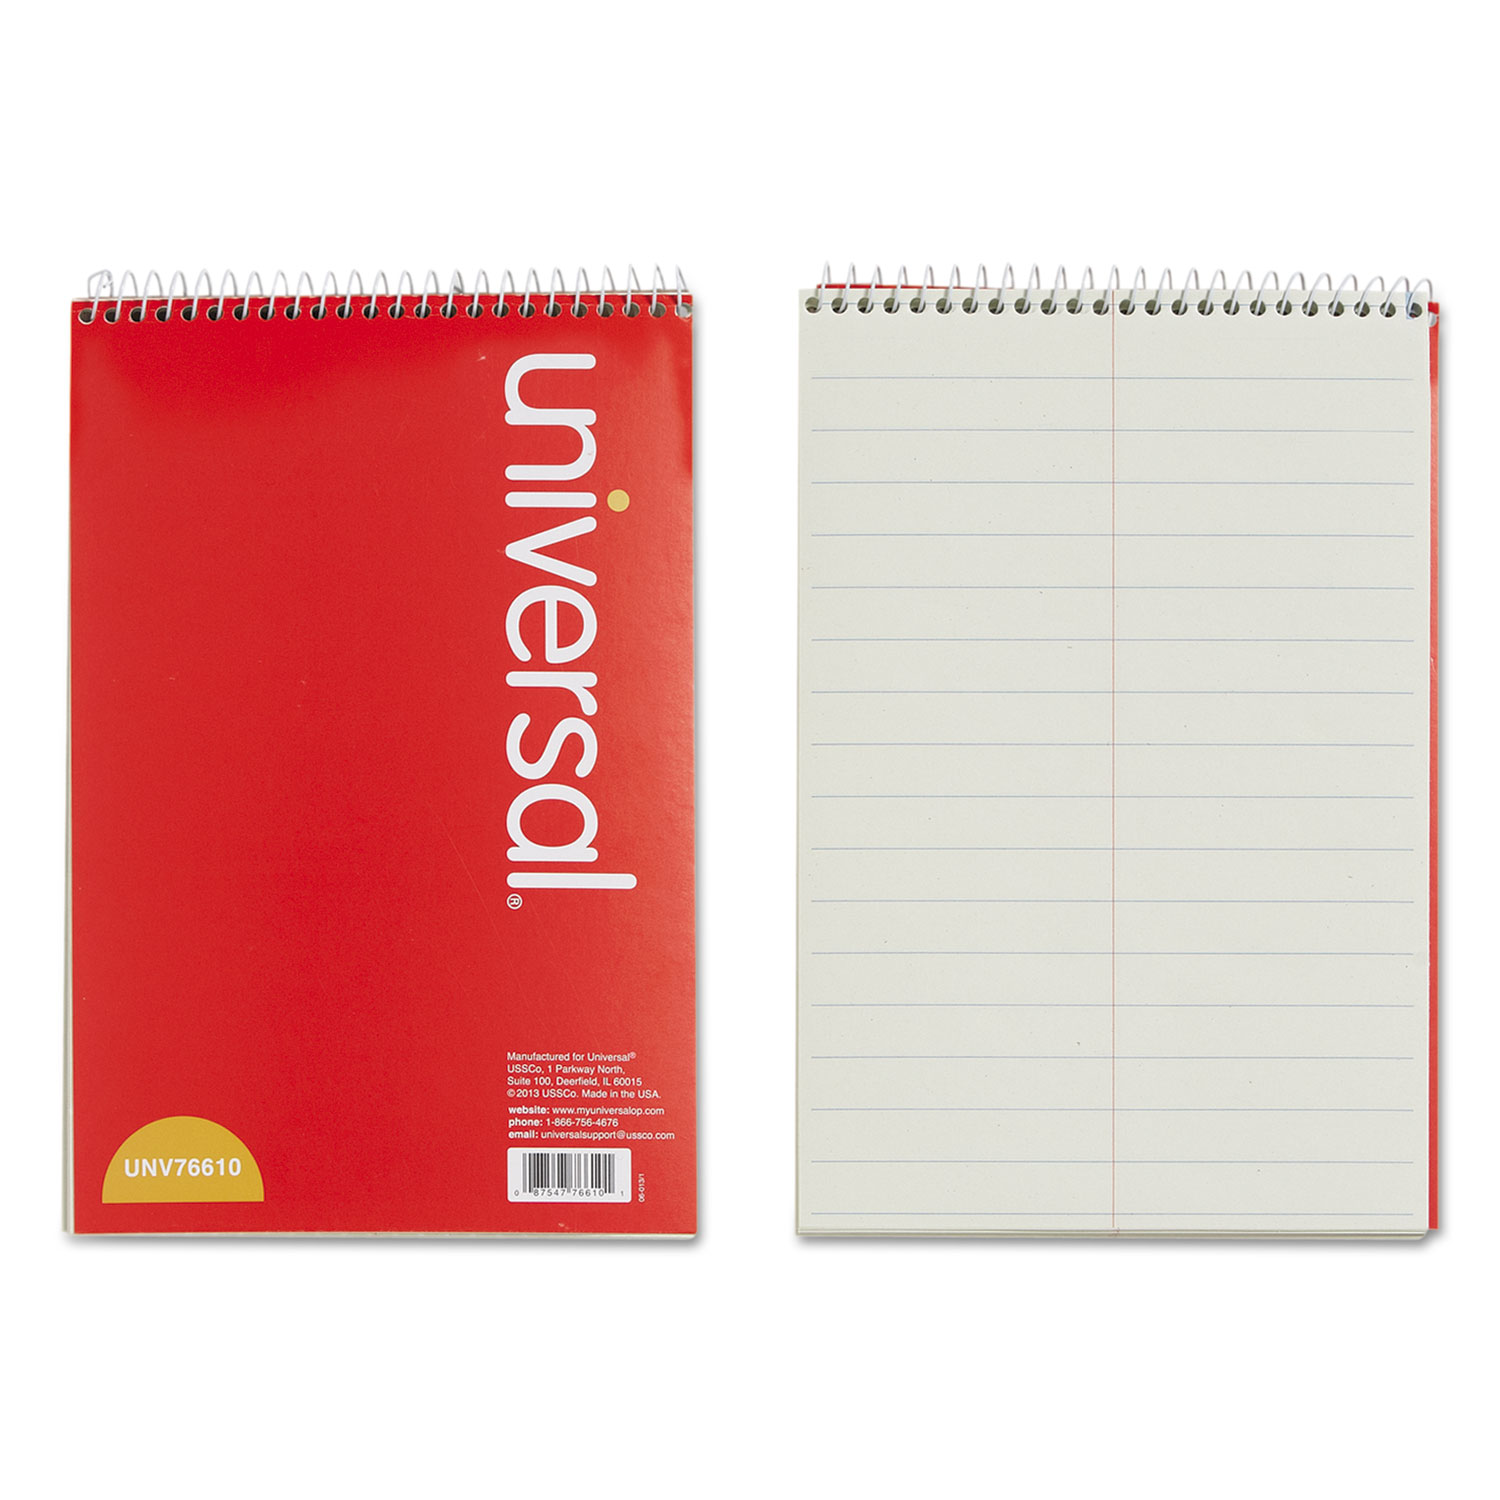  Universal UNV76610 Steno Books, Pitman Rule, 6 x 9, Green Tint, 60 Sheets (UNV76610) 